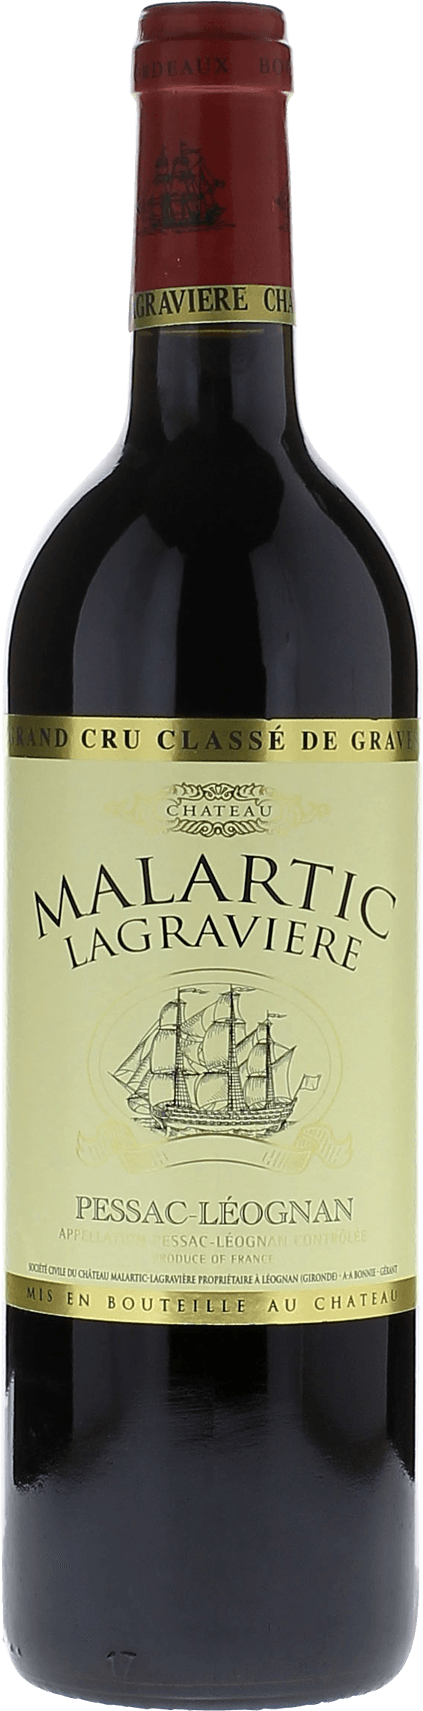 Malartic lagraviere rouge 2017 Grand Cru Class Graves, Bordeaux rouge